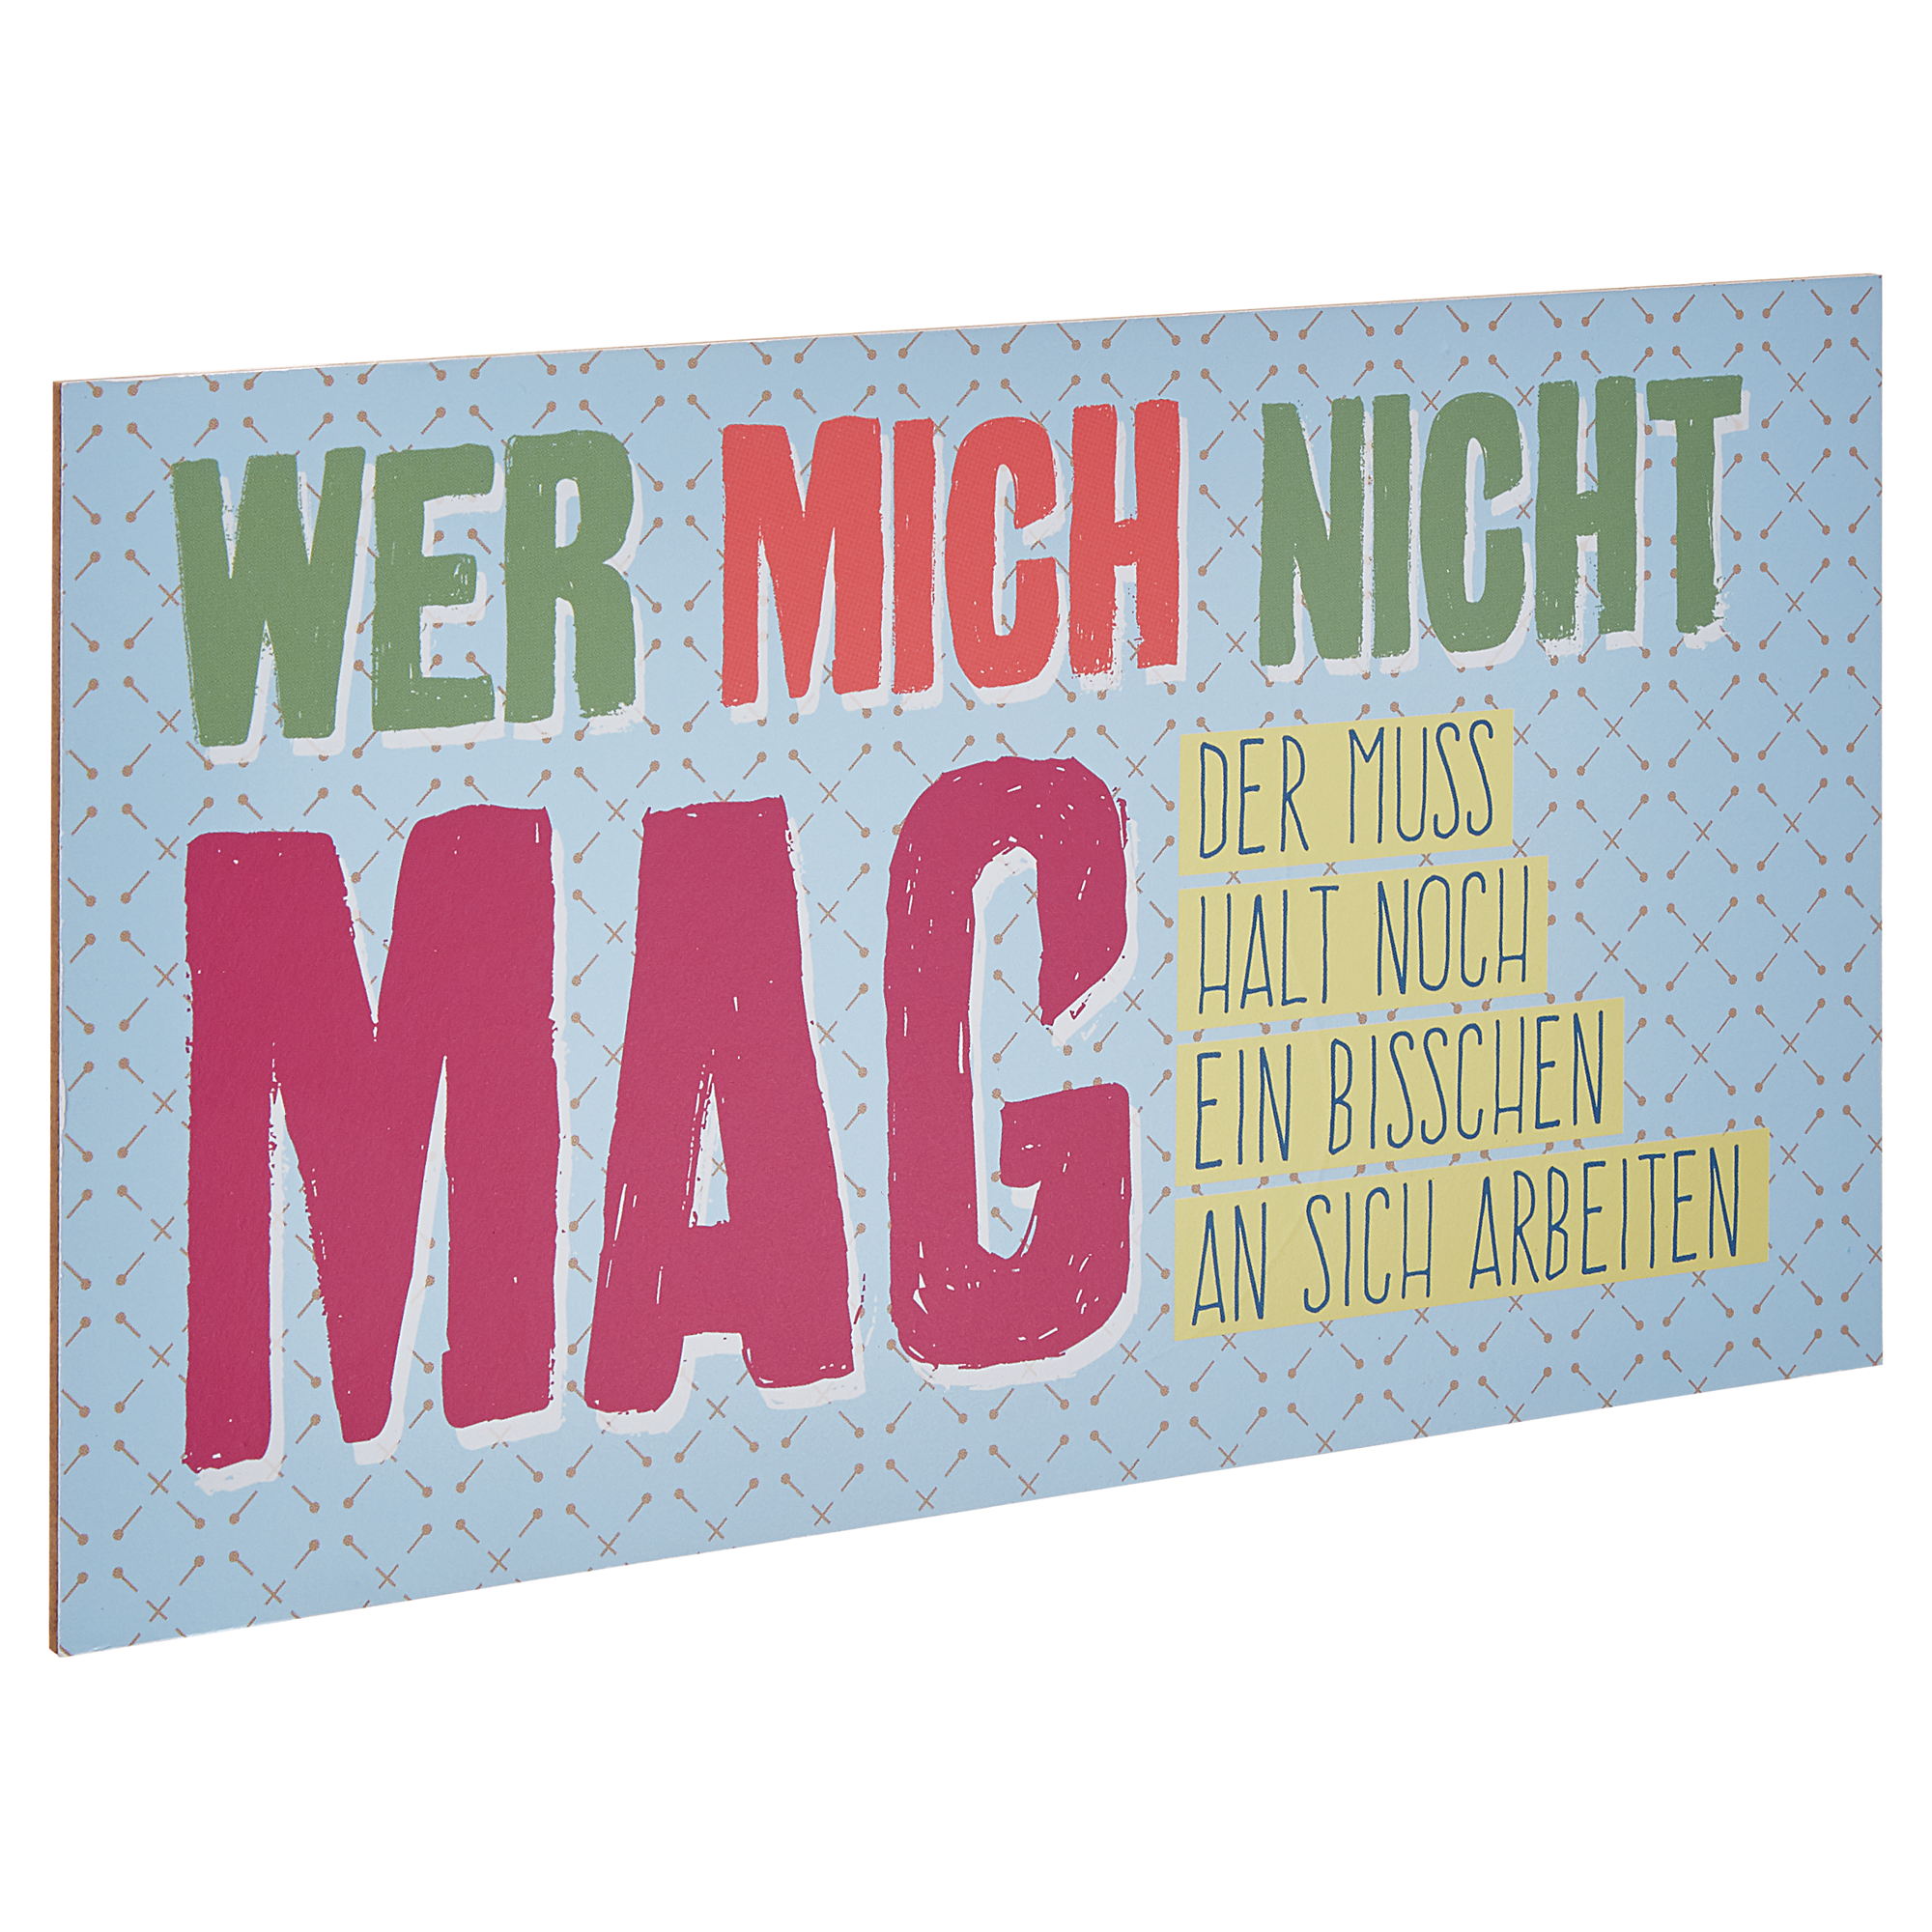 Decopanel "Wer mich nicht mag" 27 x 15 cm + product picture